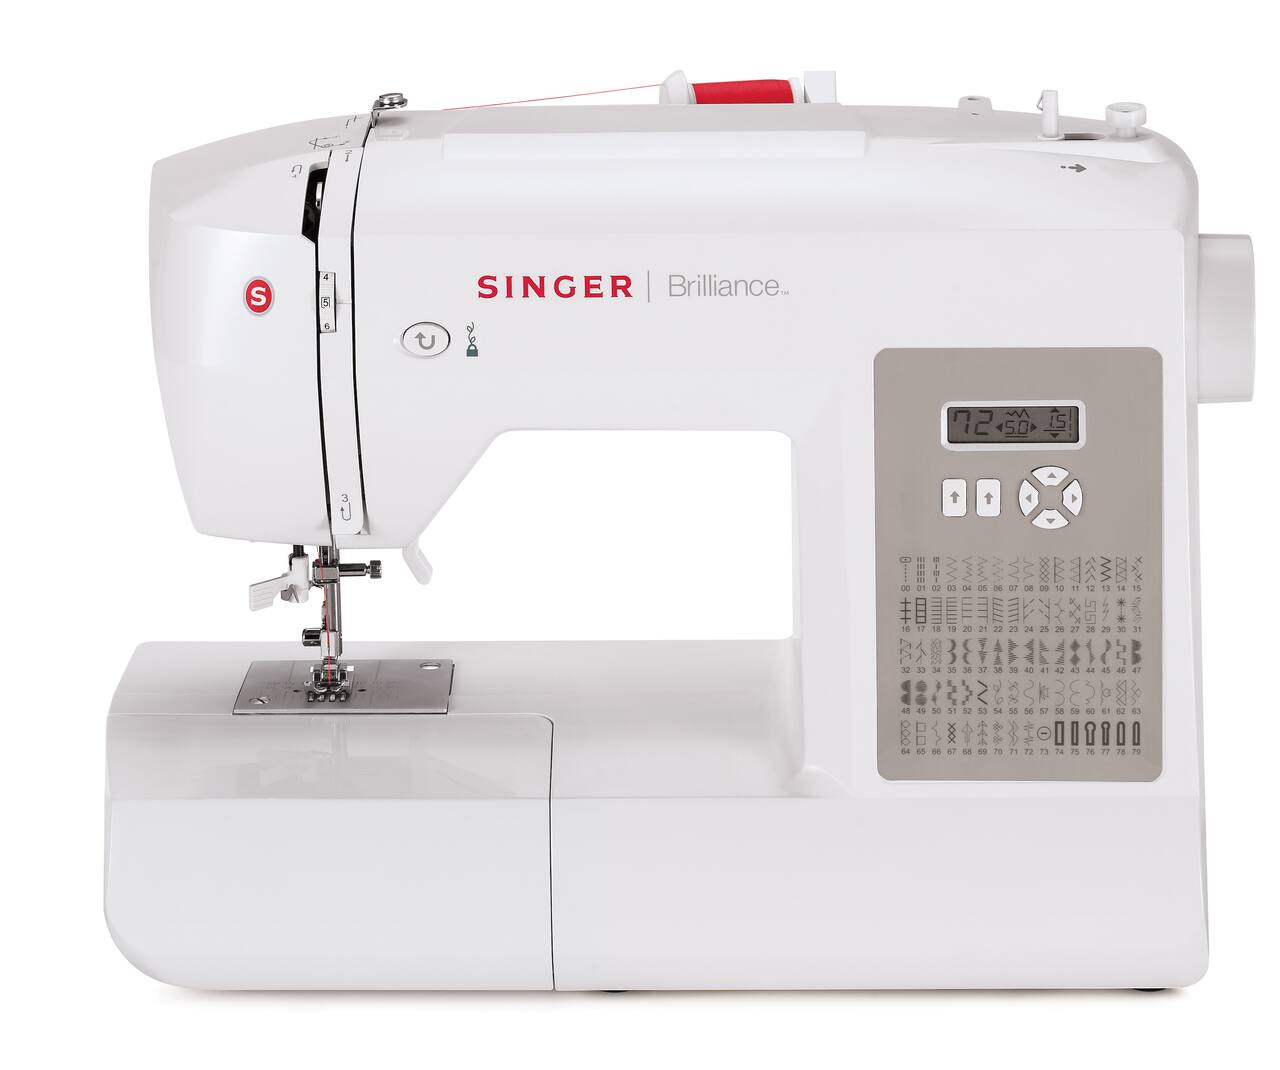 SINGER 6180 Brilliance Electric Sewing Machine